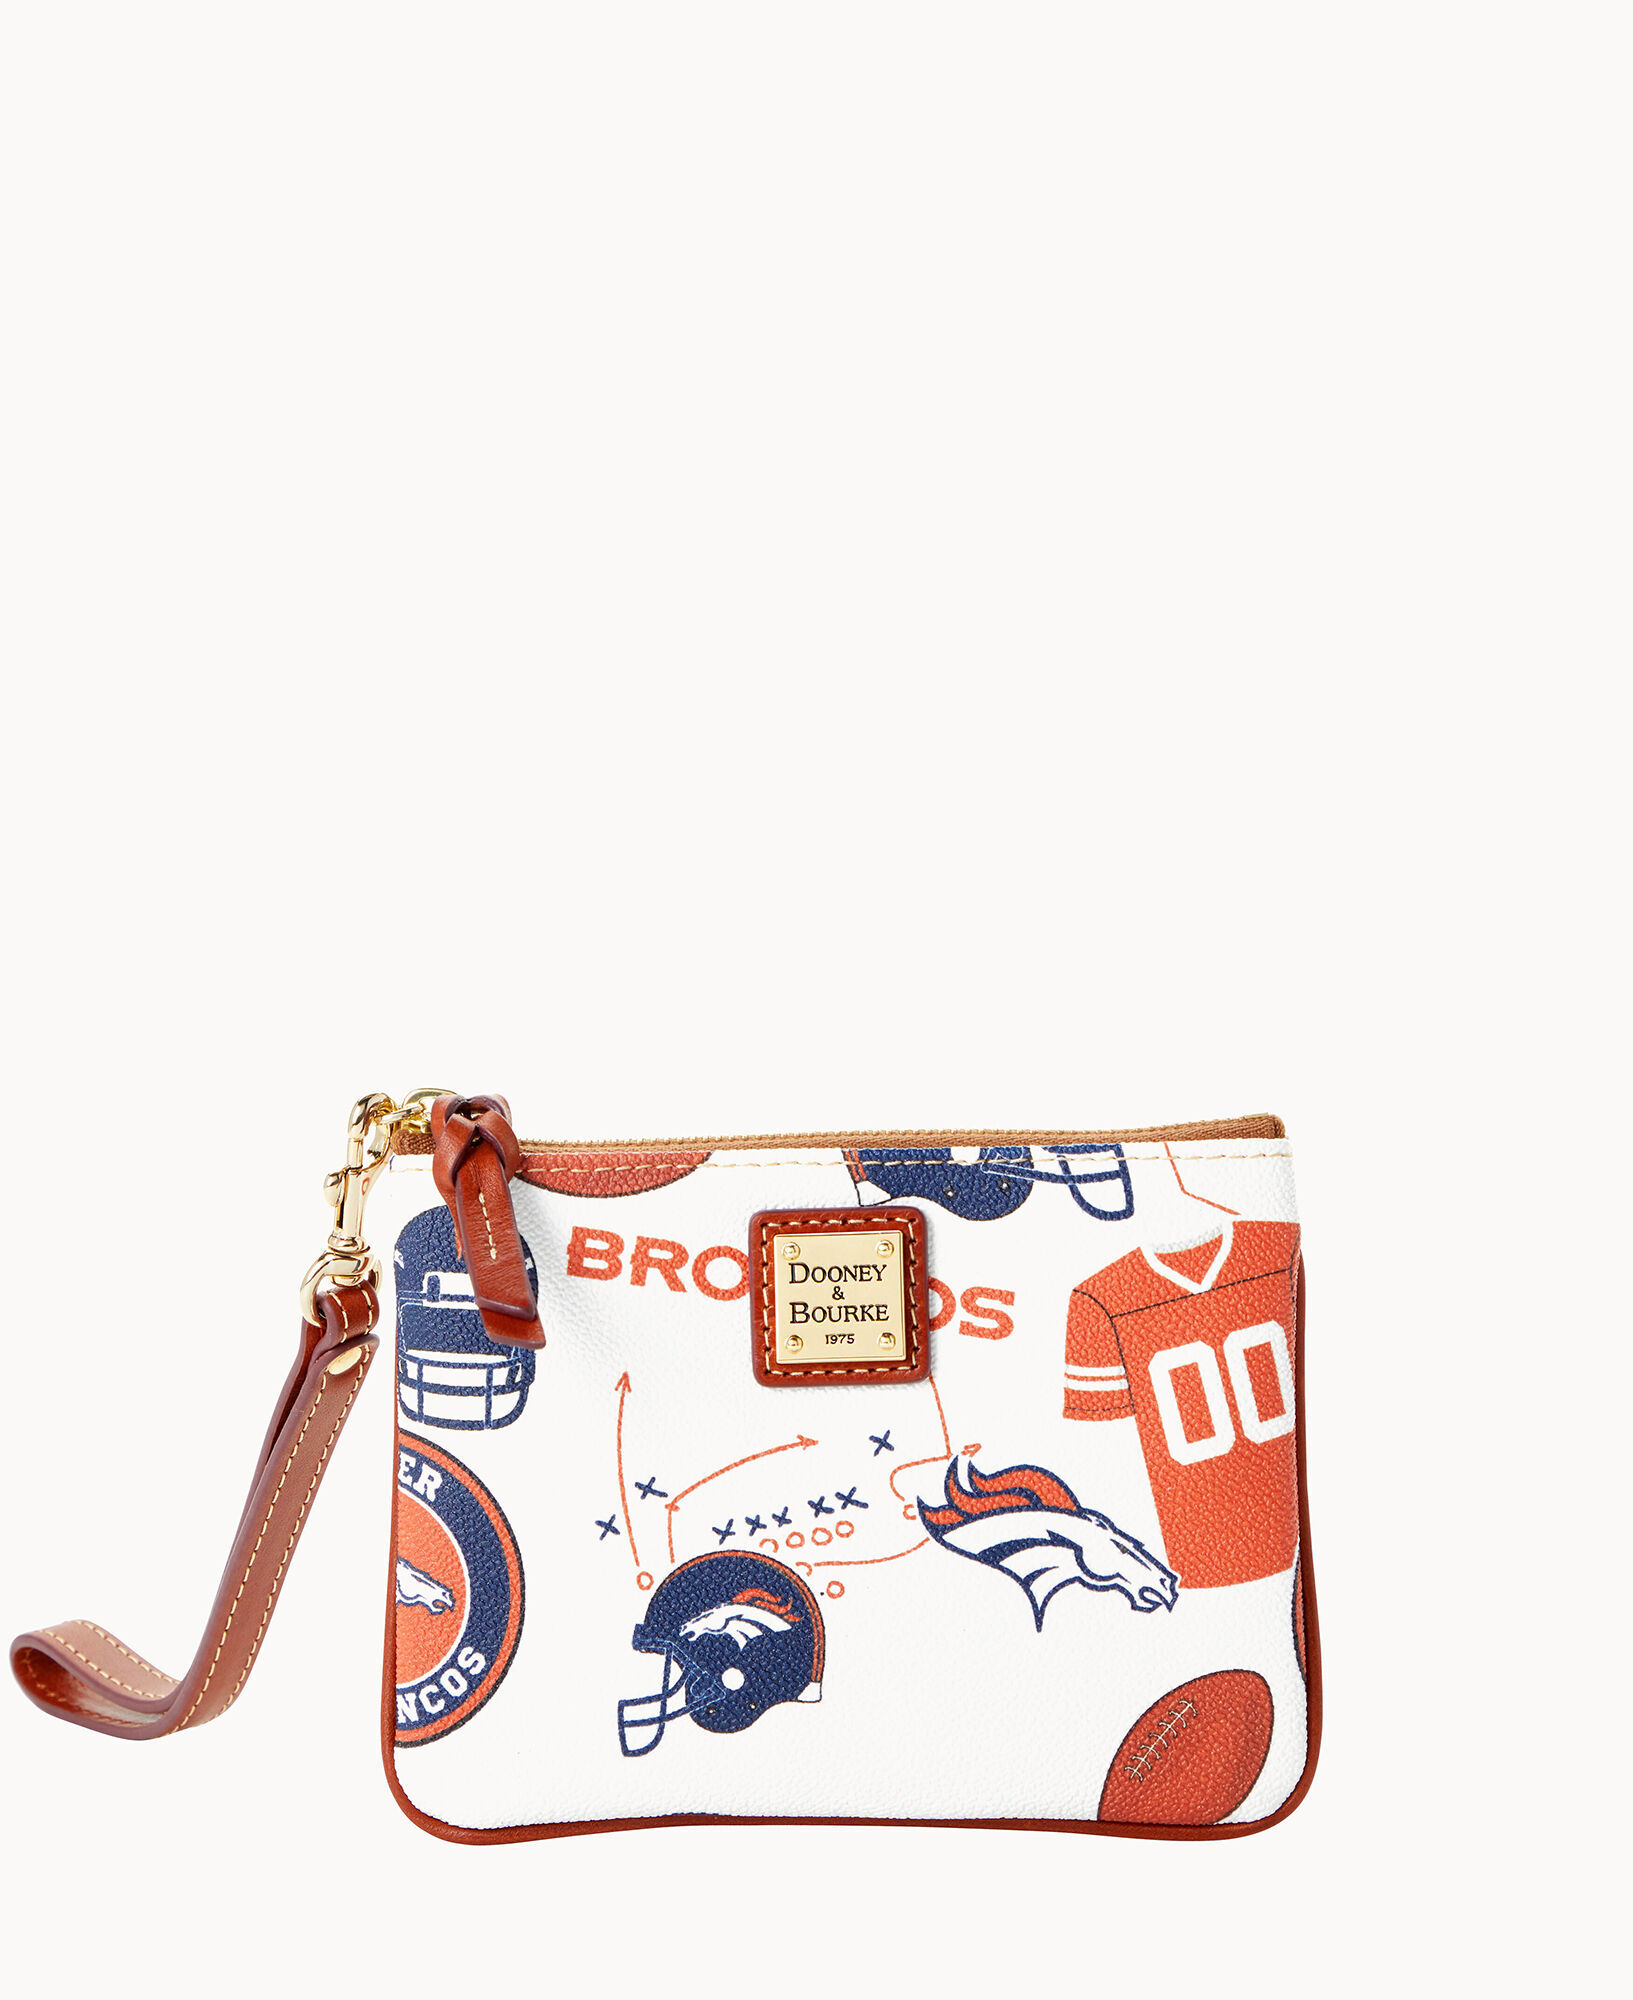 Dooney & Bourke Denver Bronco purse